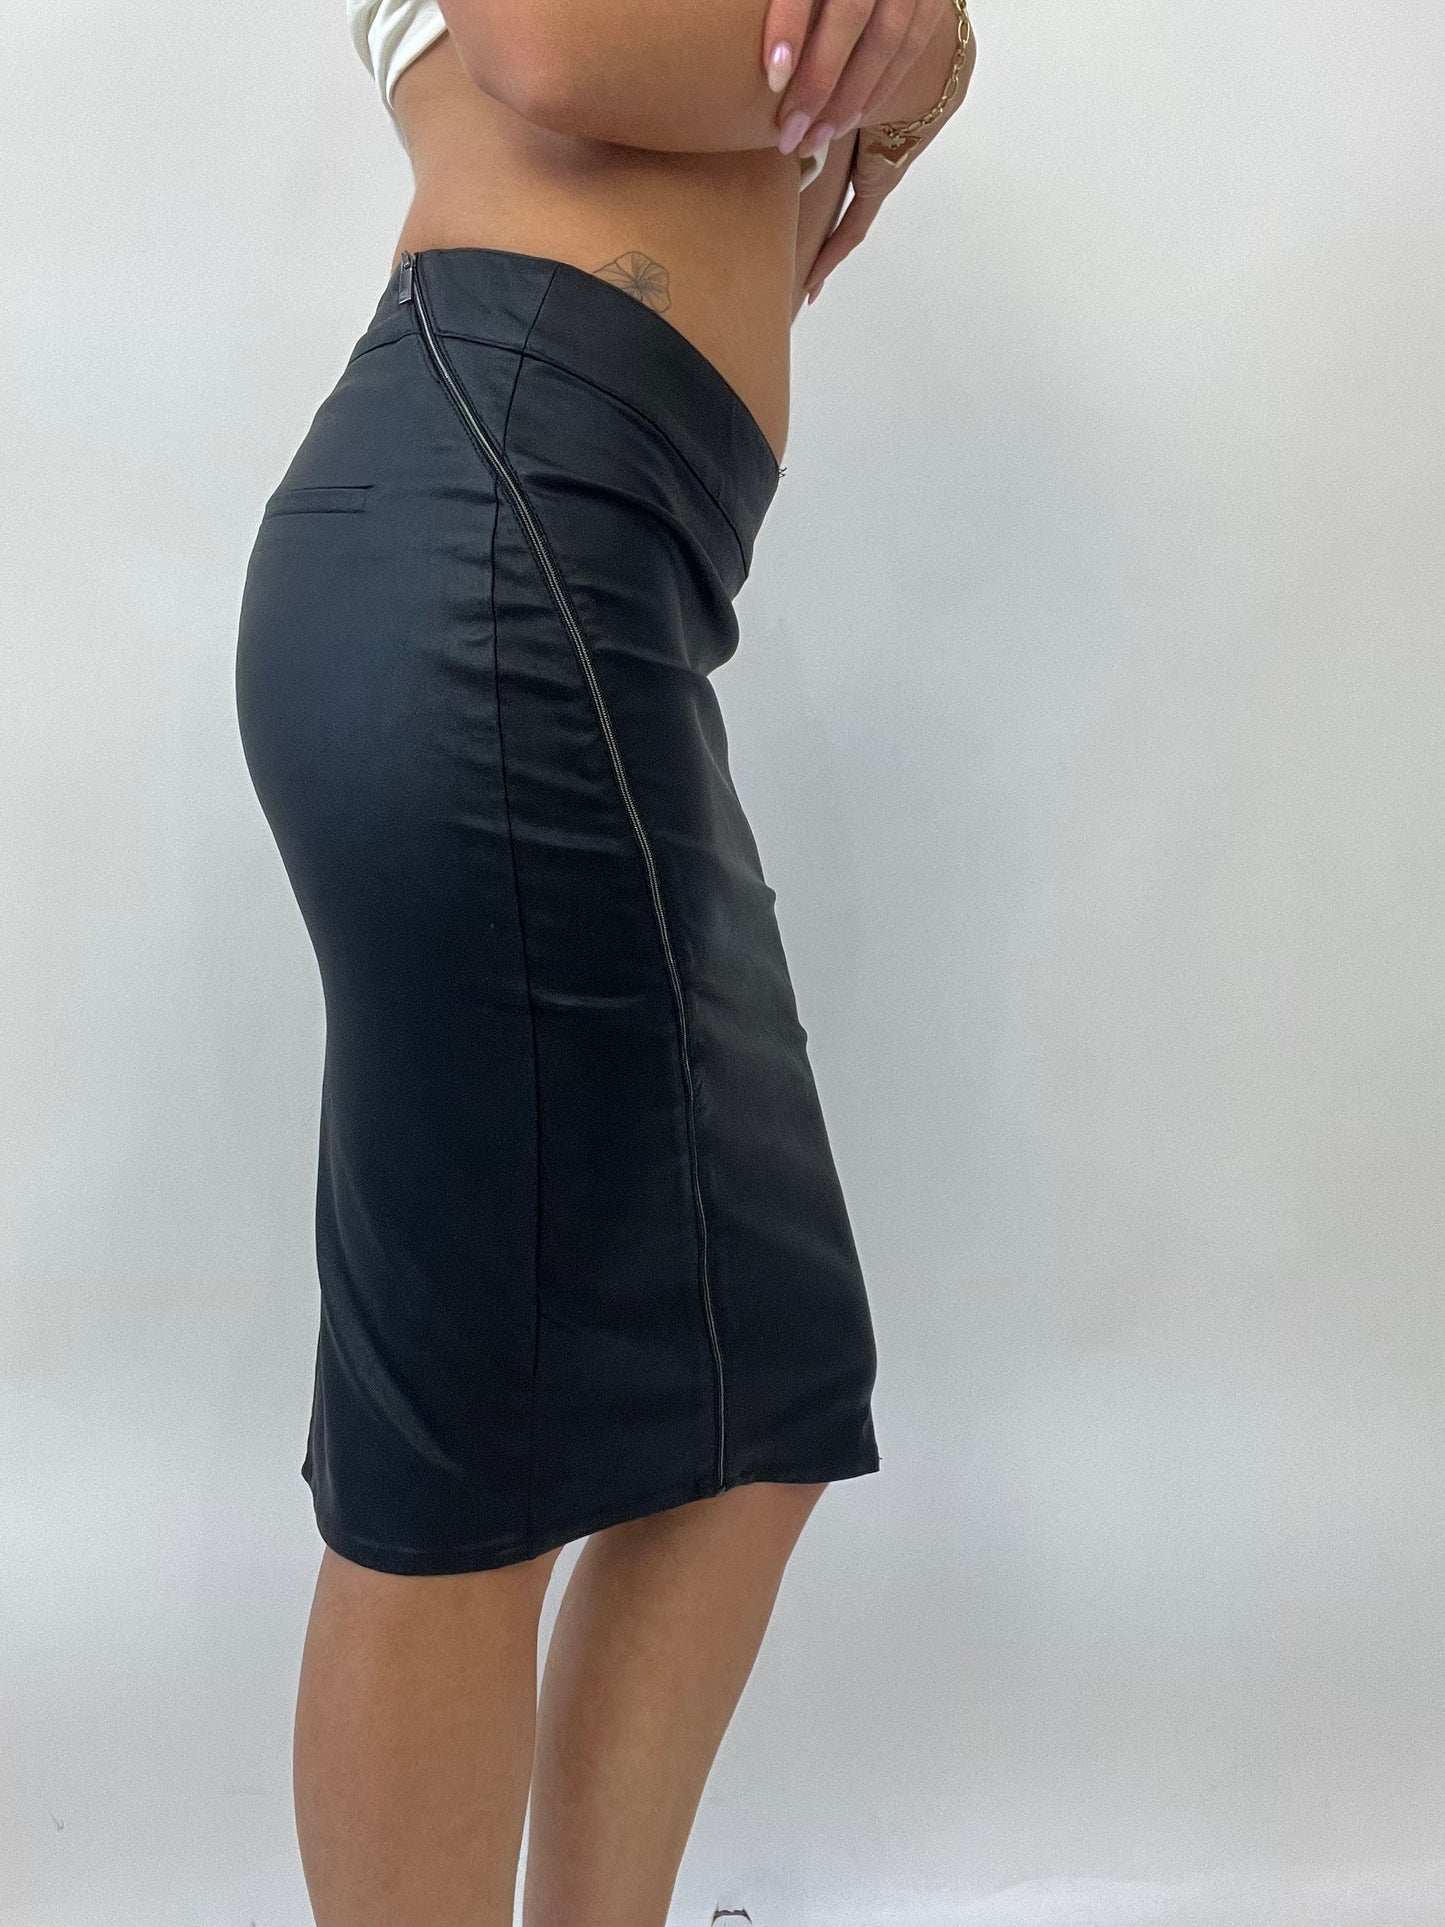 BRAT GIRL SUMMER DROP | small morgan de toi faux leather skirt